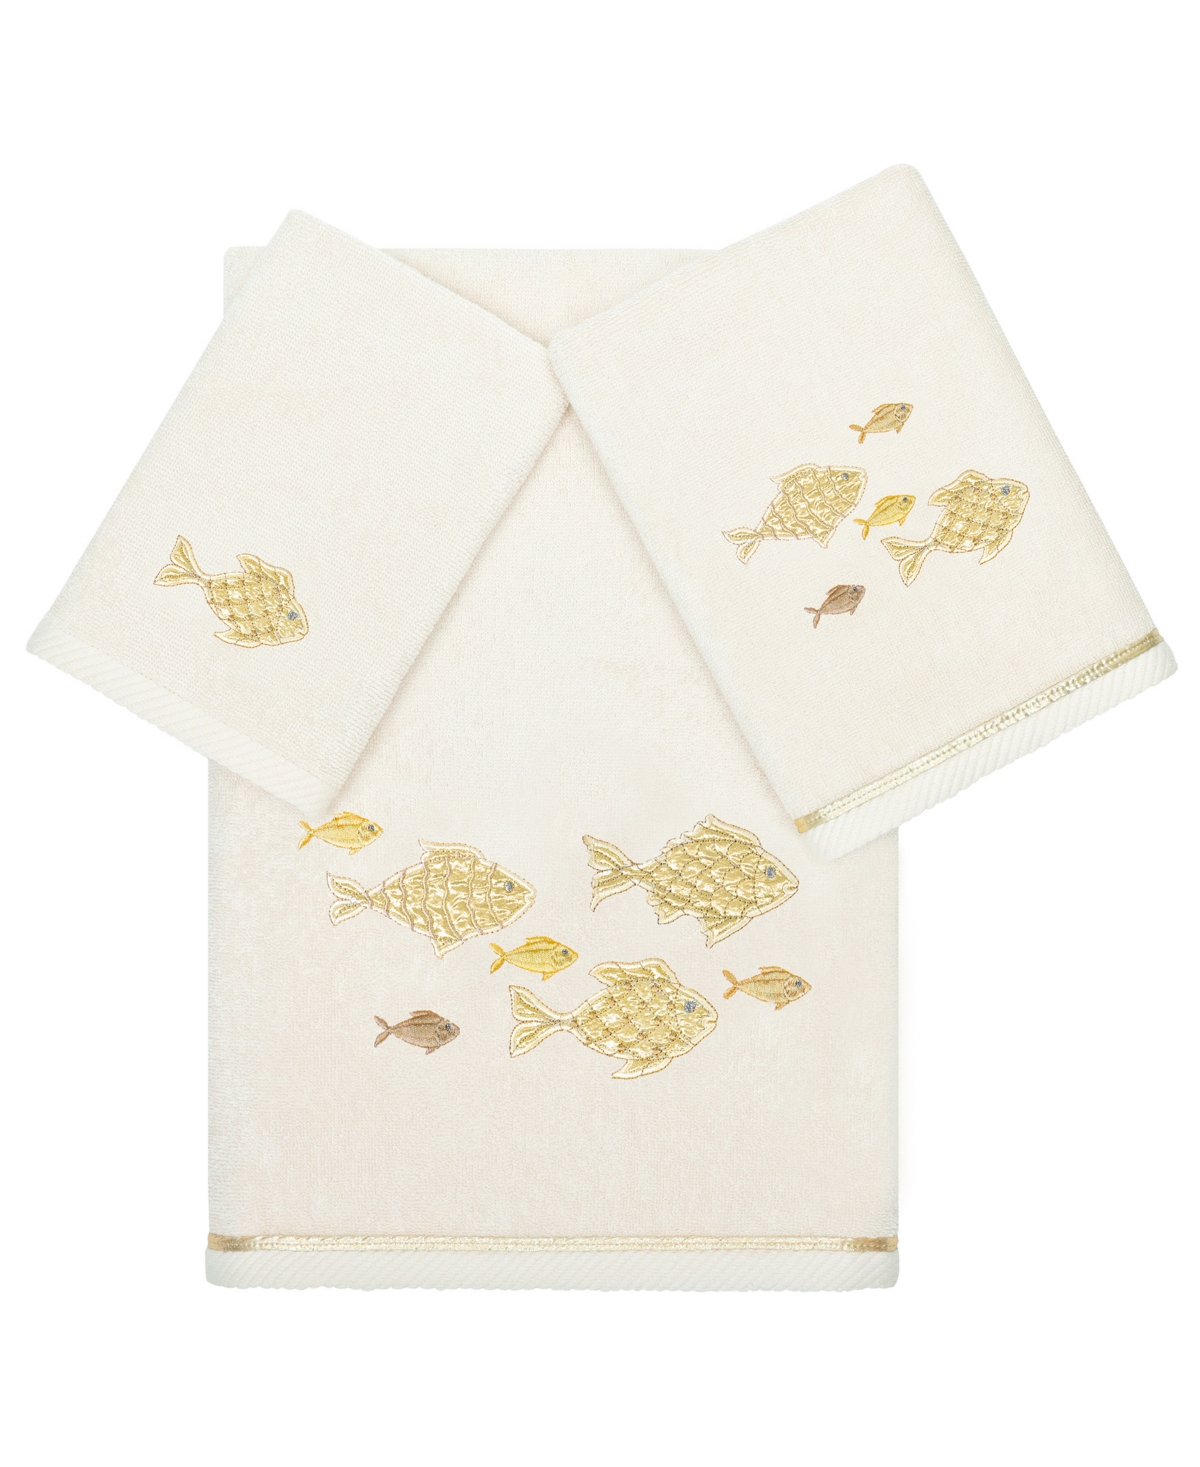 Linum Home Textiles Turkish Cotton Figi Embellished Towel Set, 3 Piece Bedding In Beige